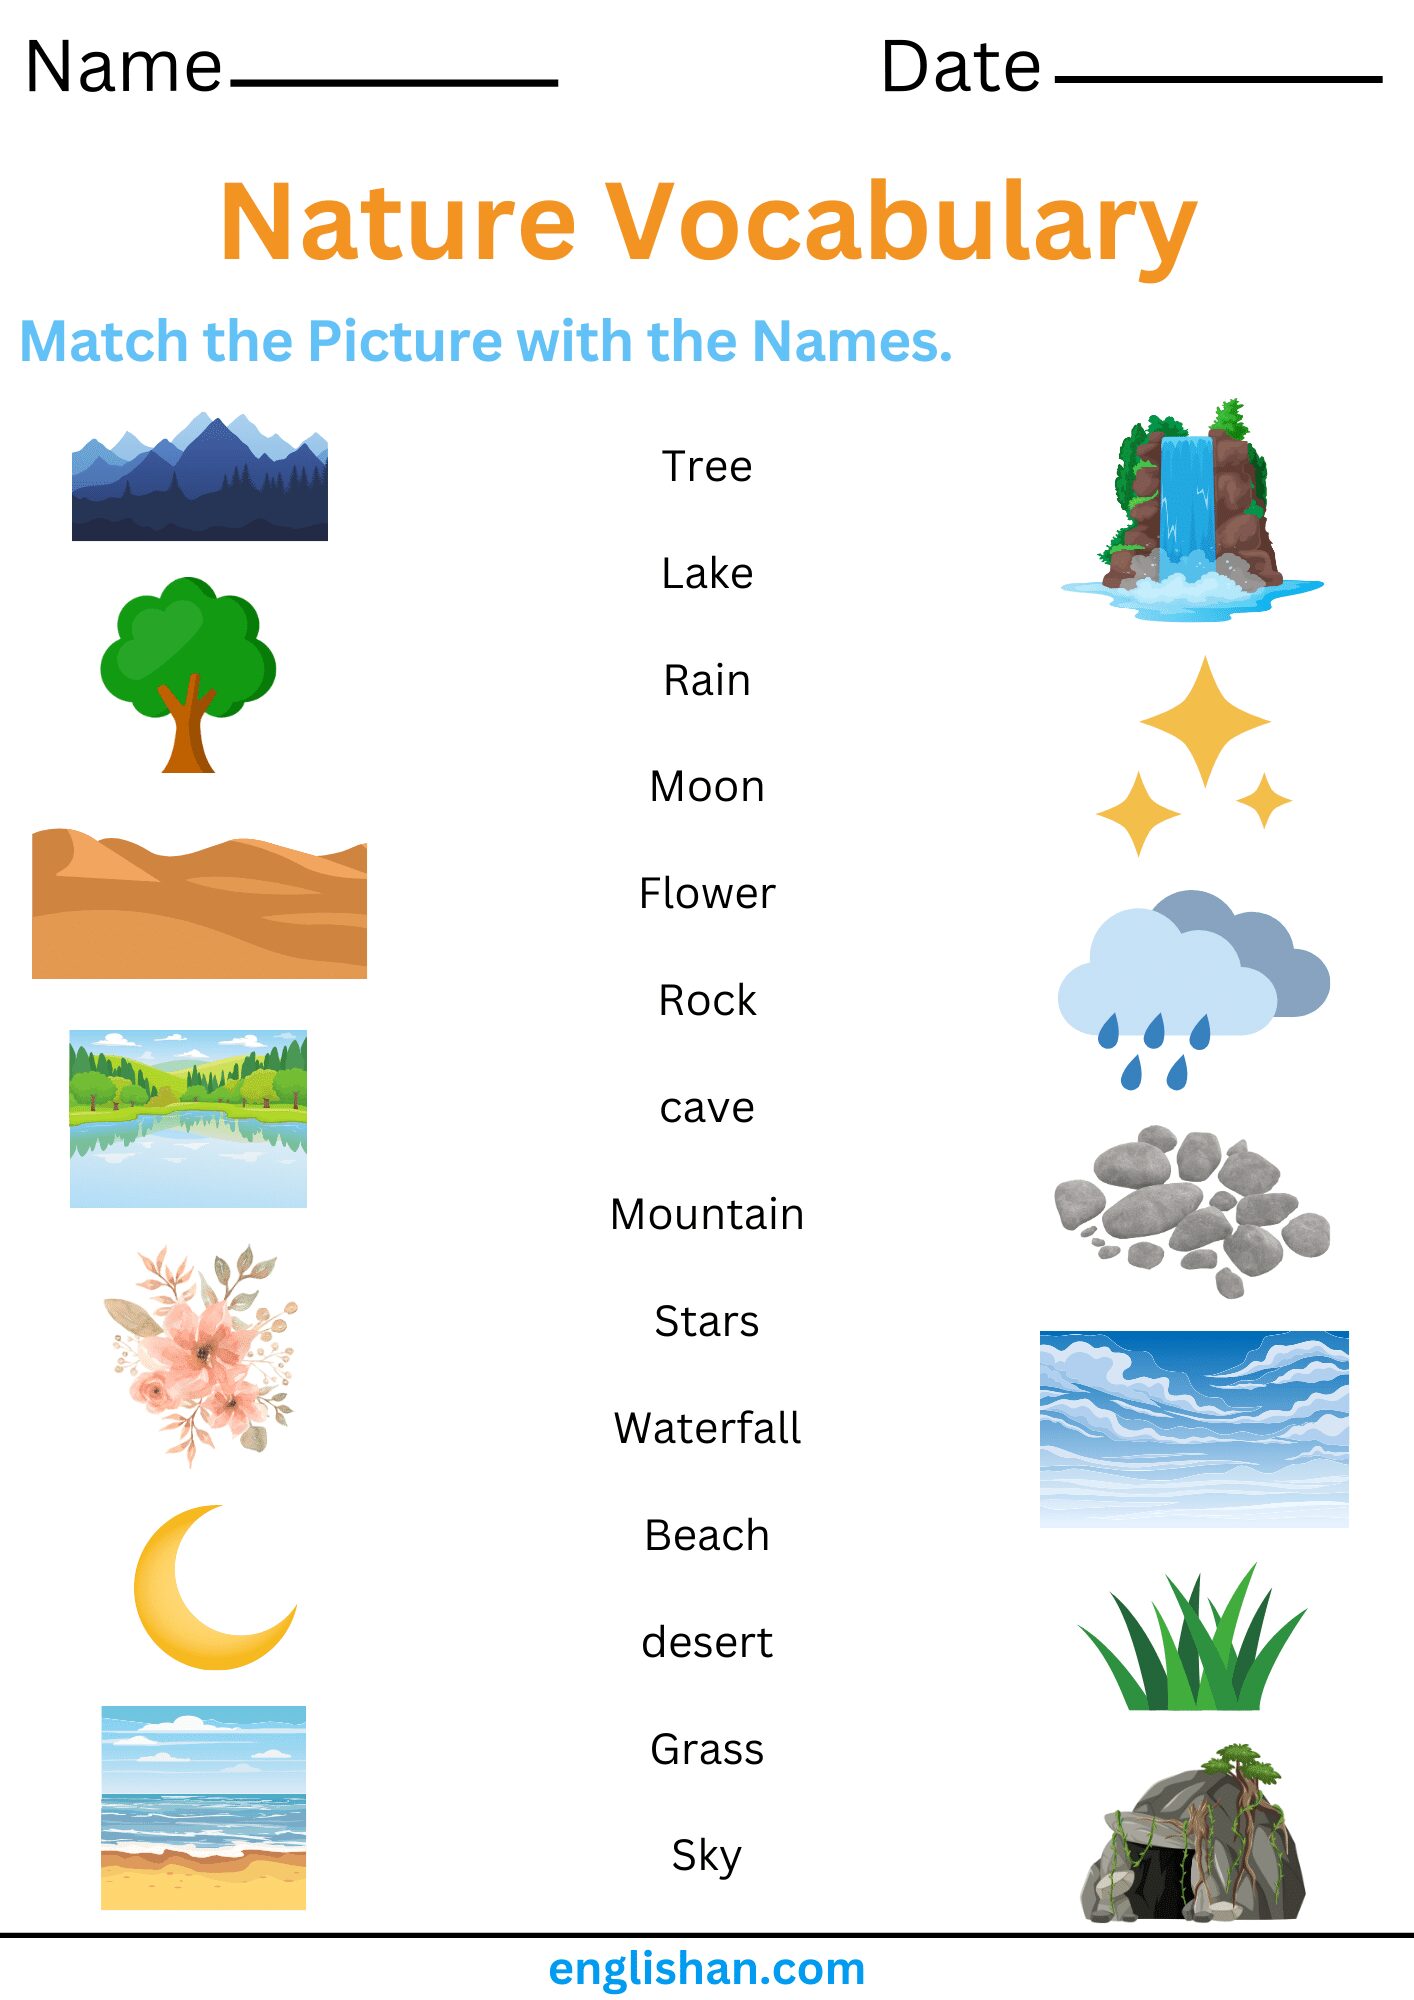 Nature Vocabulary Worksheet and Exercises